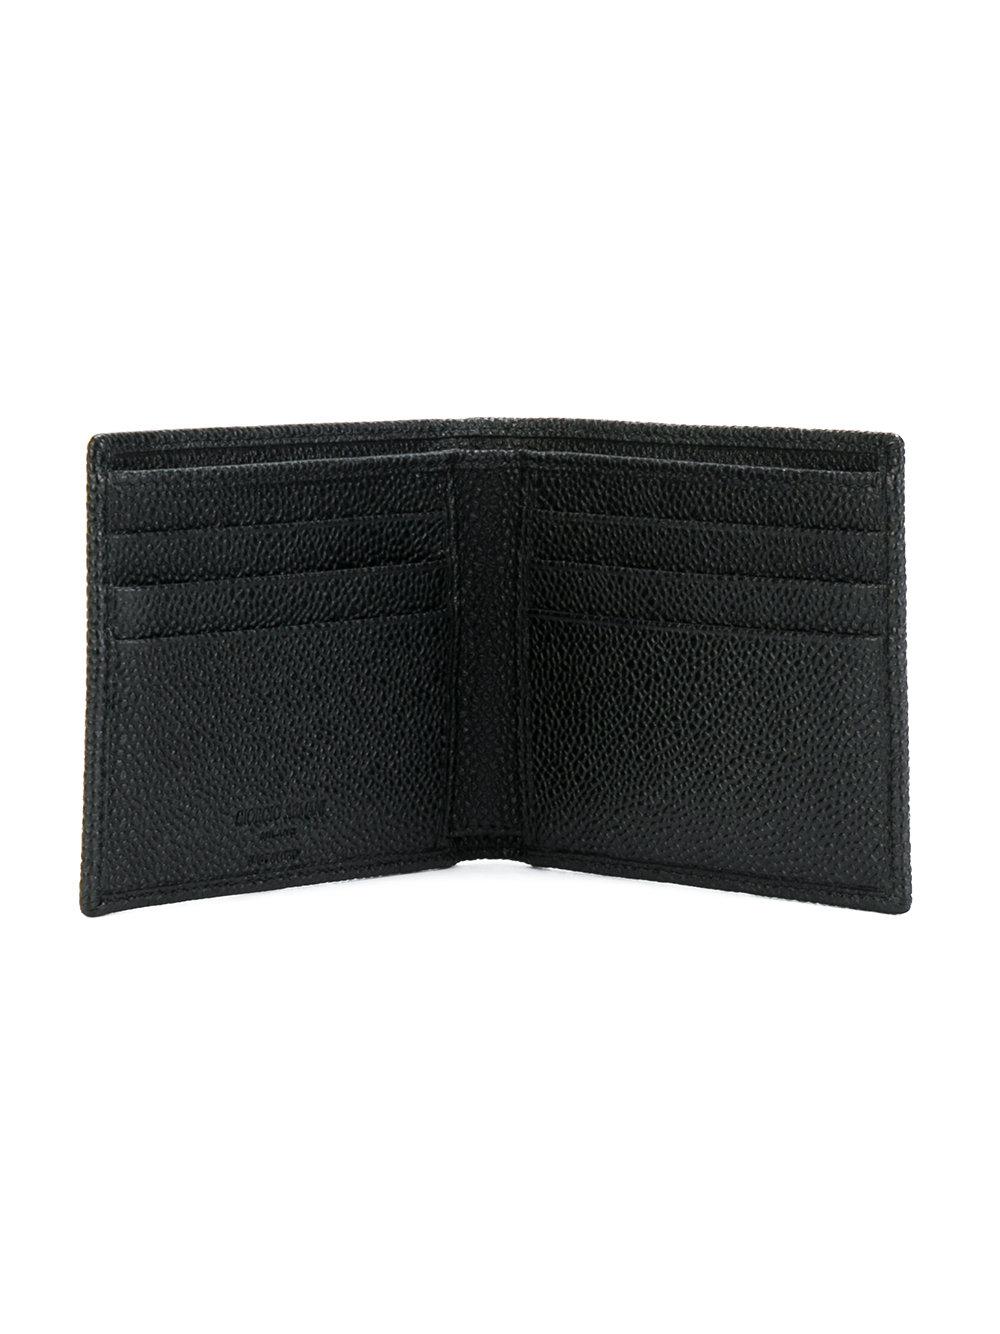 Lyst - Giorgio Armani Billfold Wallet in Black for Men